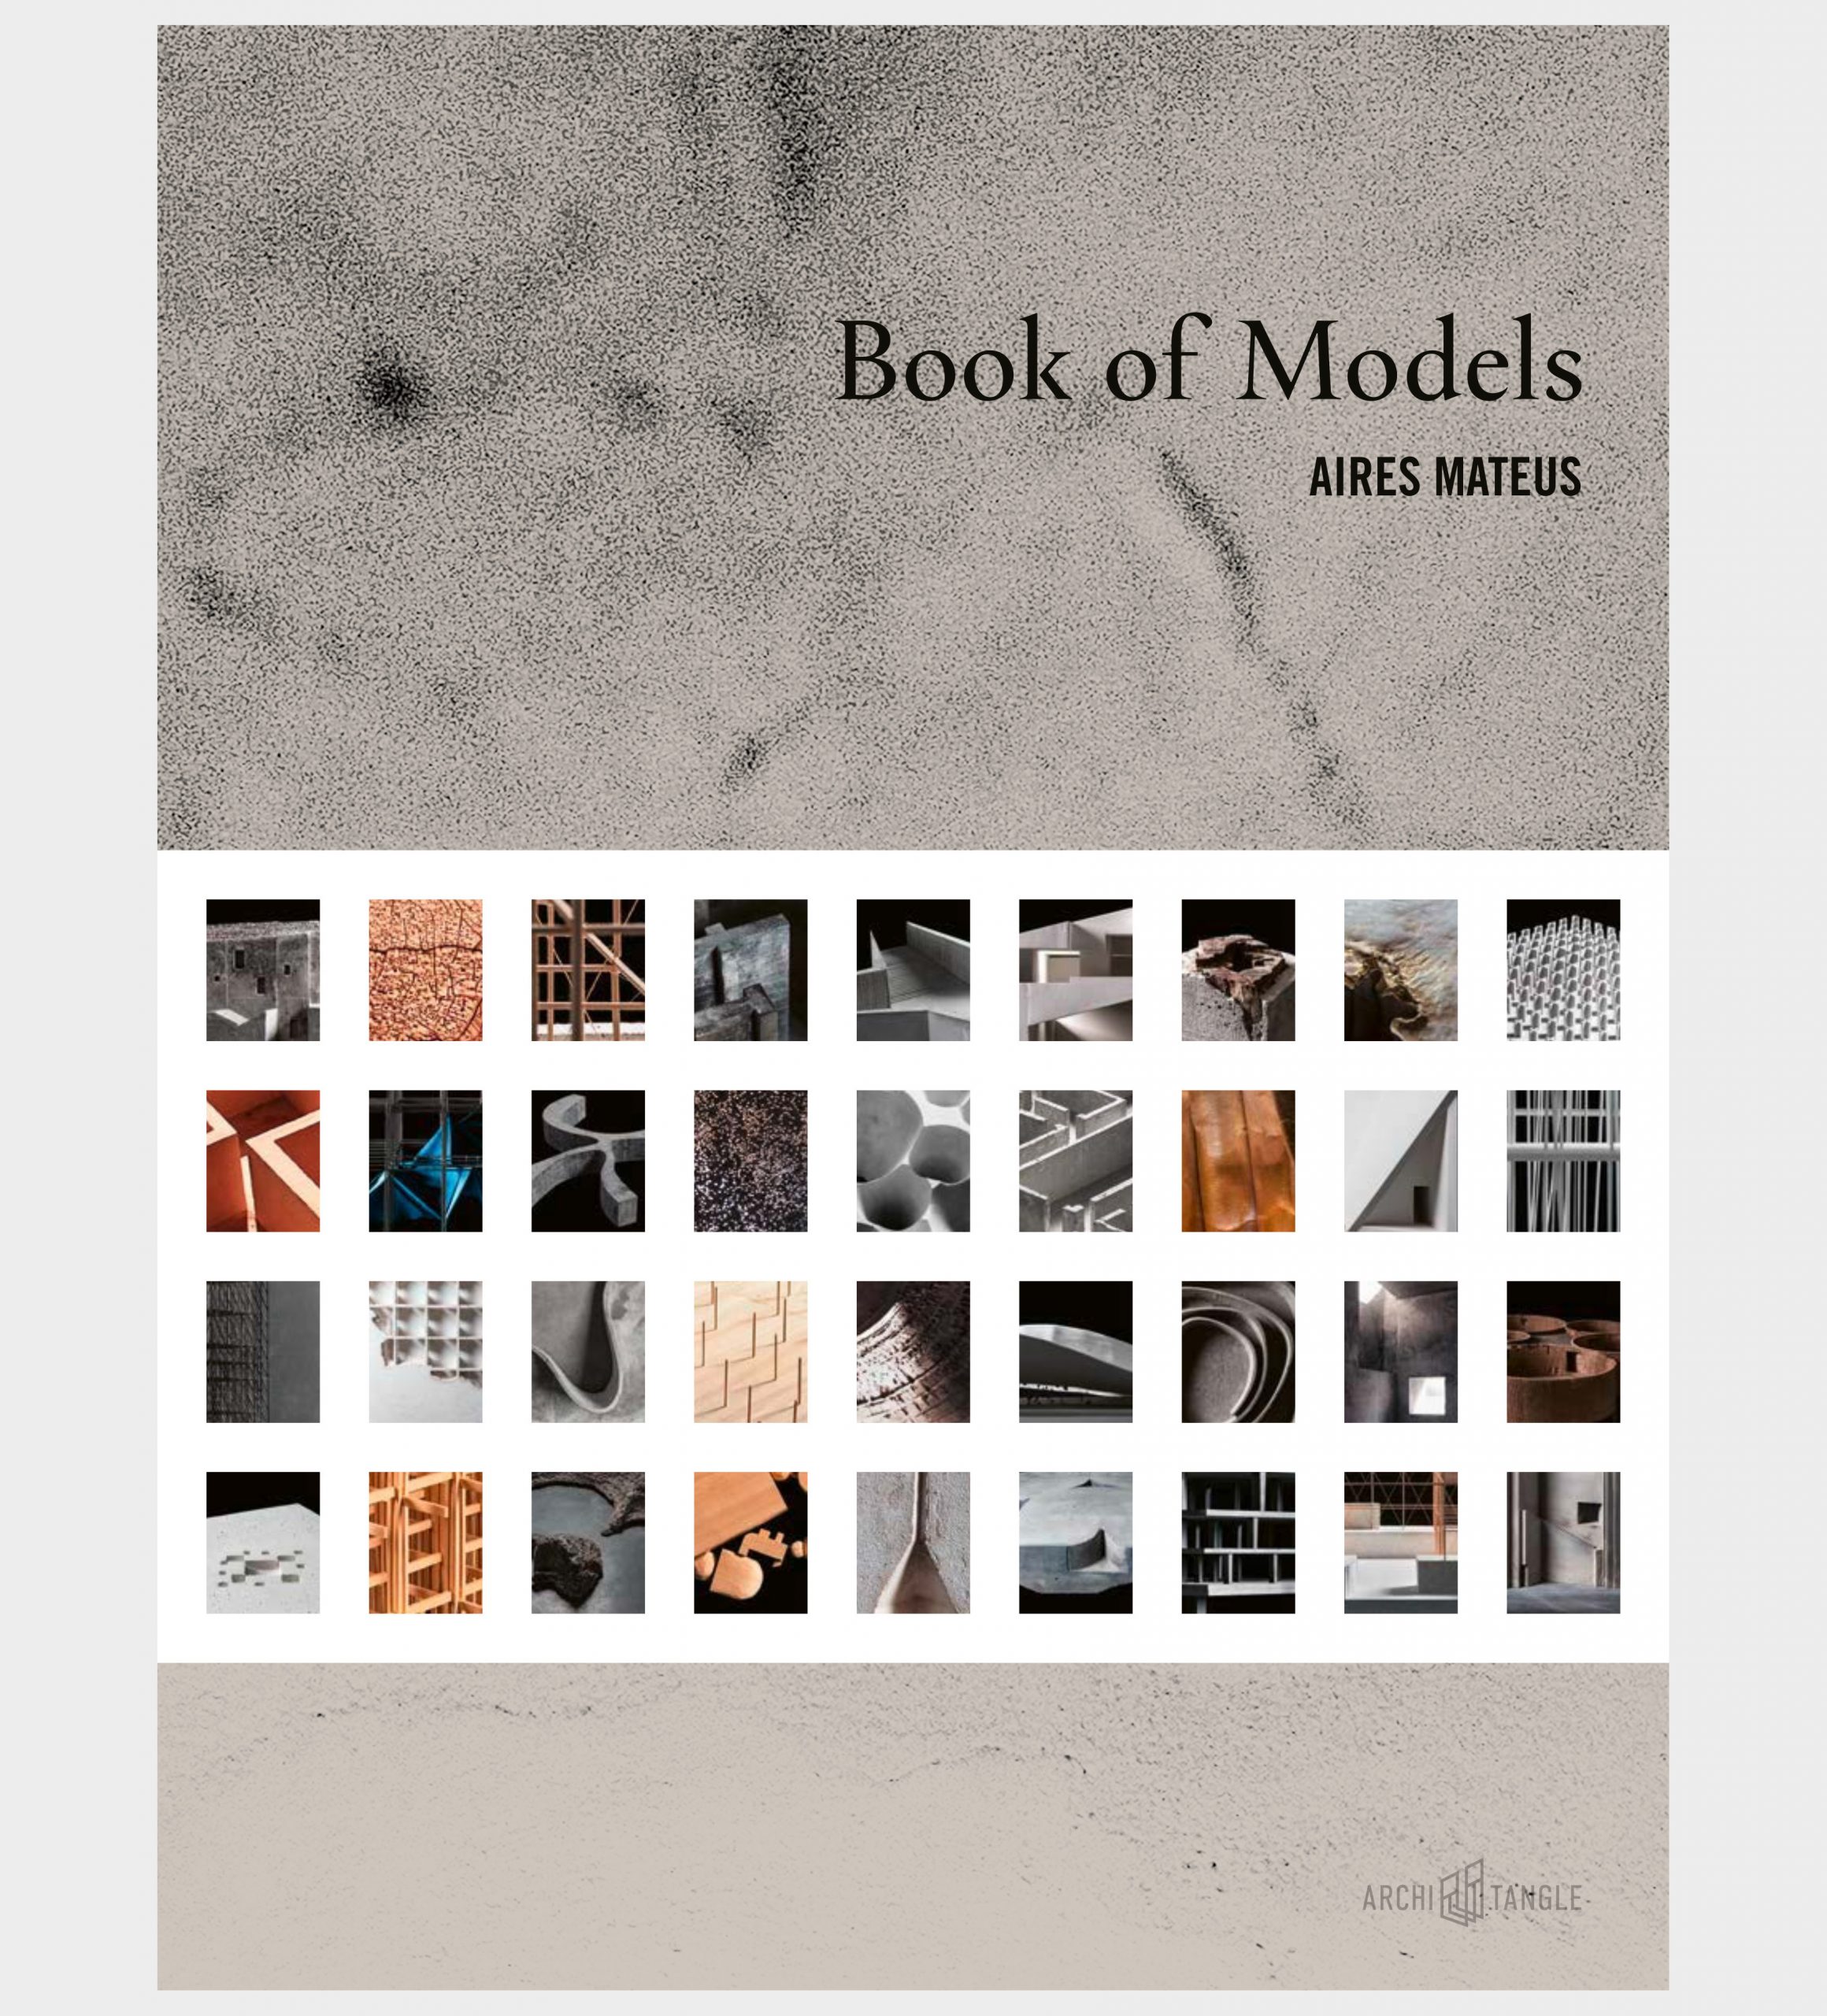 AIRES MATEUS - Book of Models